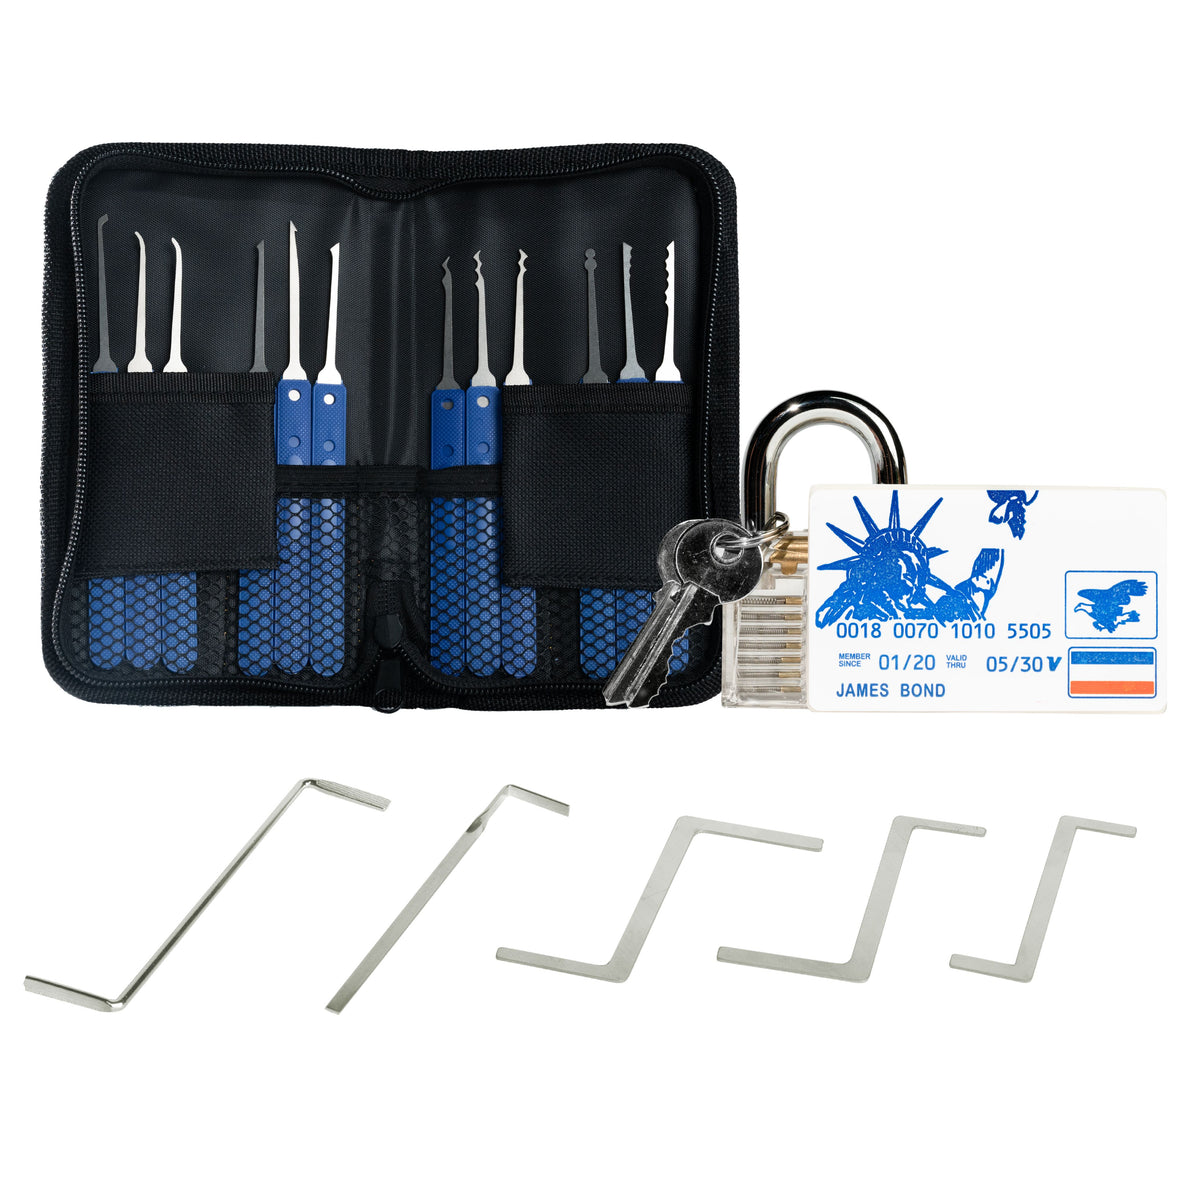 (V1)19 Pcs Lock Picking Kit with 1 Transparent Practice Lock Tool 1 credit card lockpick set - Professional Stainless Steel Multitool Practice Tool Lock Set Handbag for Beginners & Locksmiths